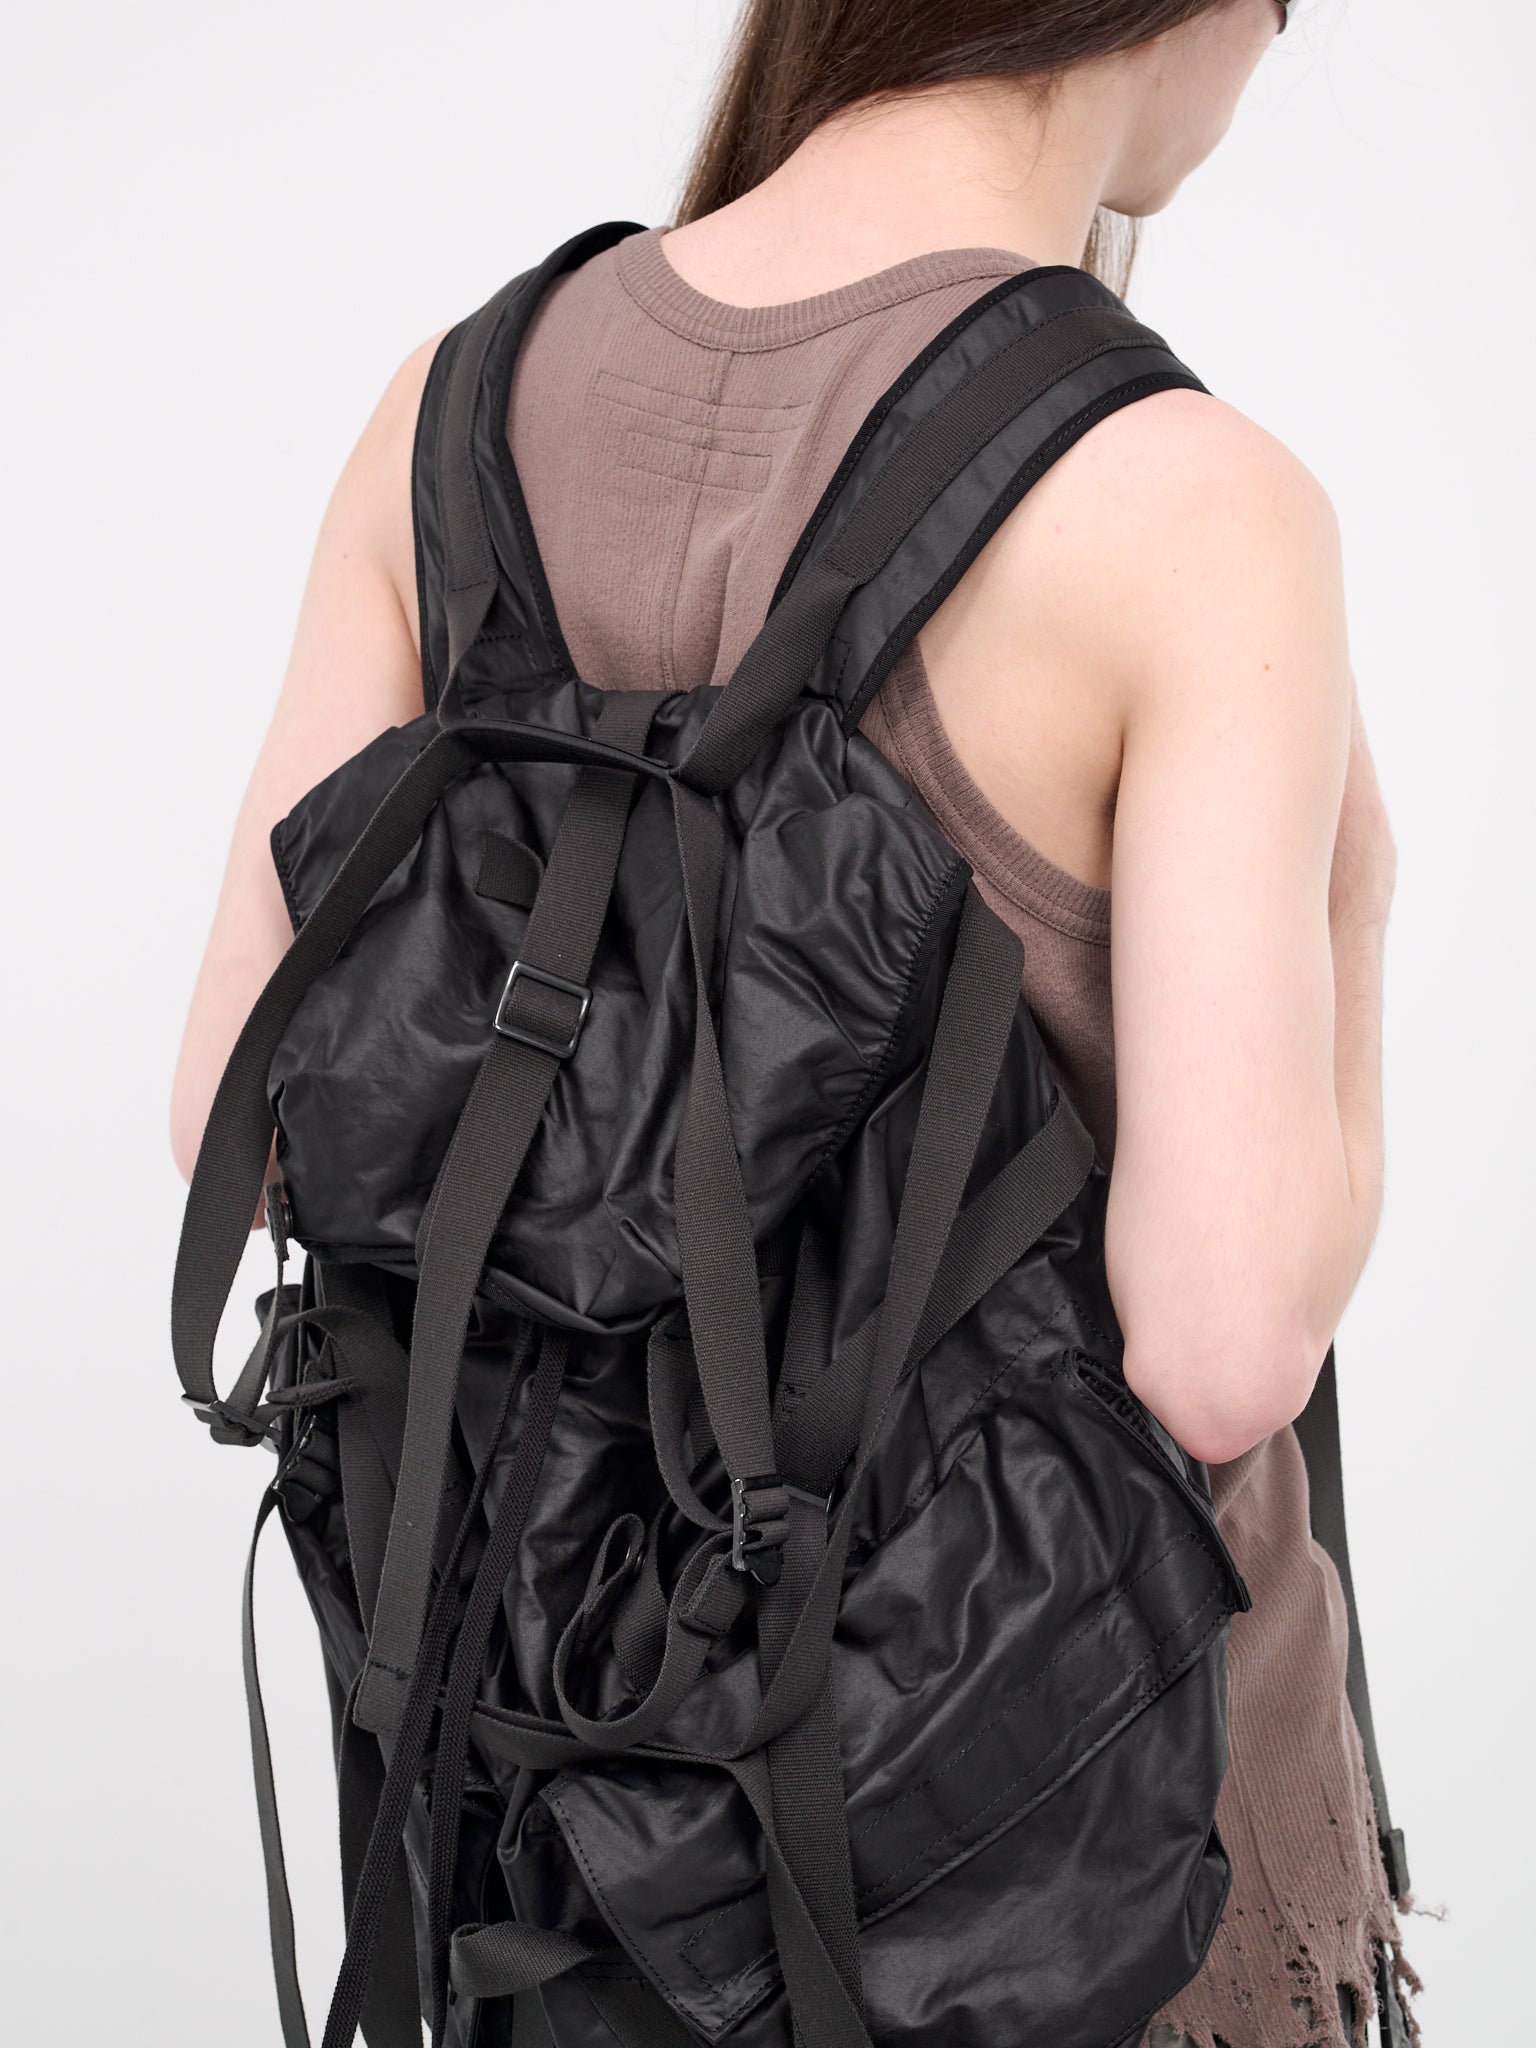 Multi-Pocket Backpack (857BGU1-BLACK)